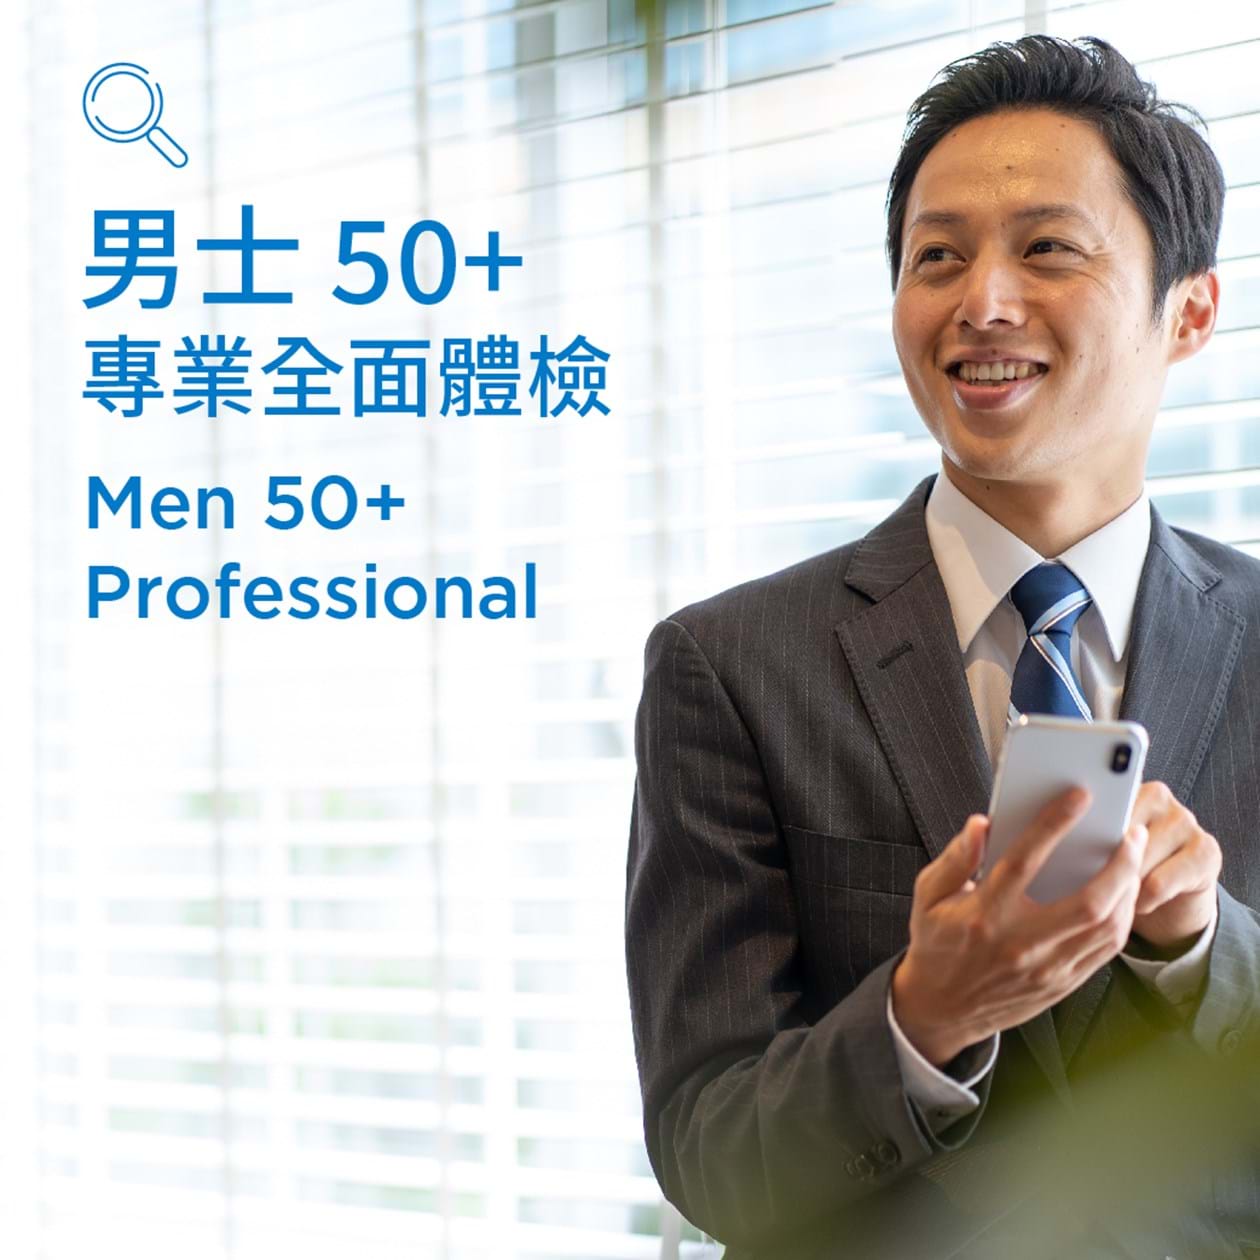 Men 50+ (Professional)